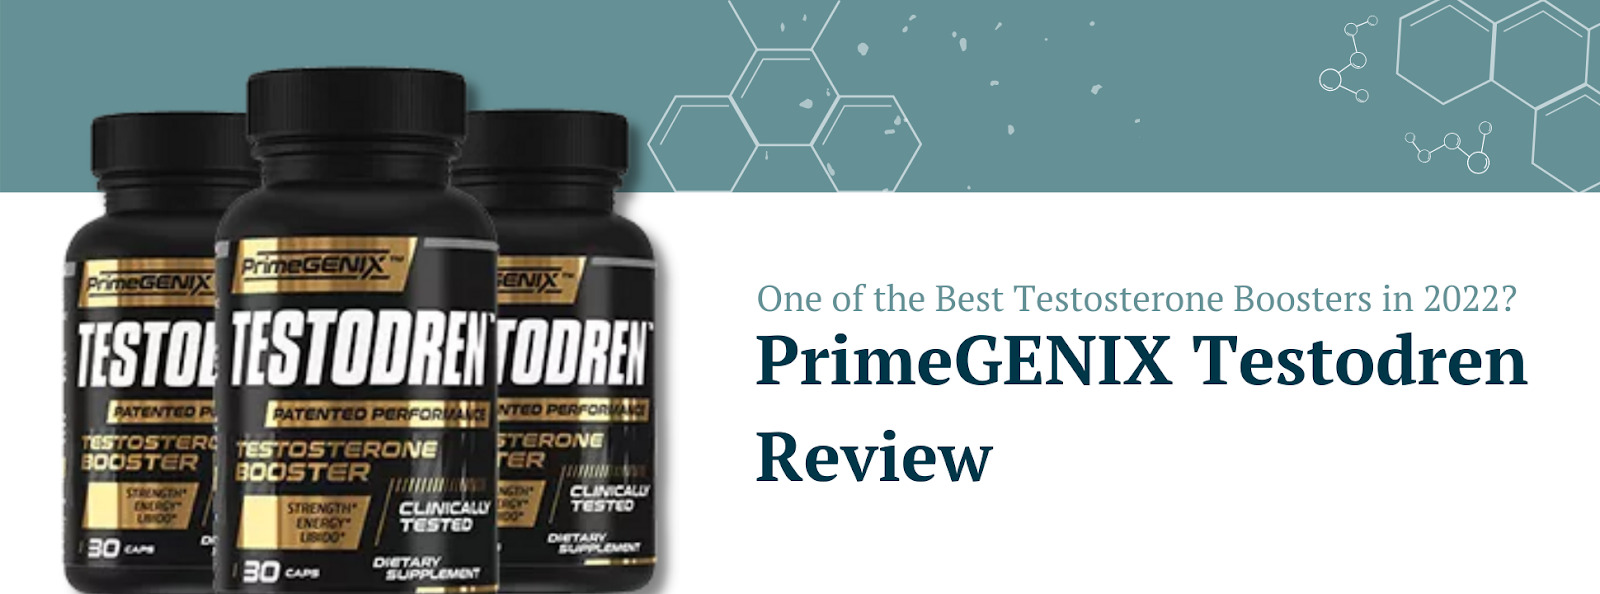 PrimeGENIX Testodren Review: One of the Best Testosterone Boosters in 2022? - Farr Institute